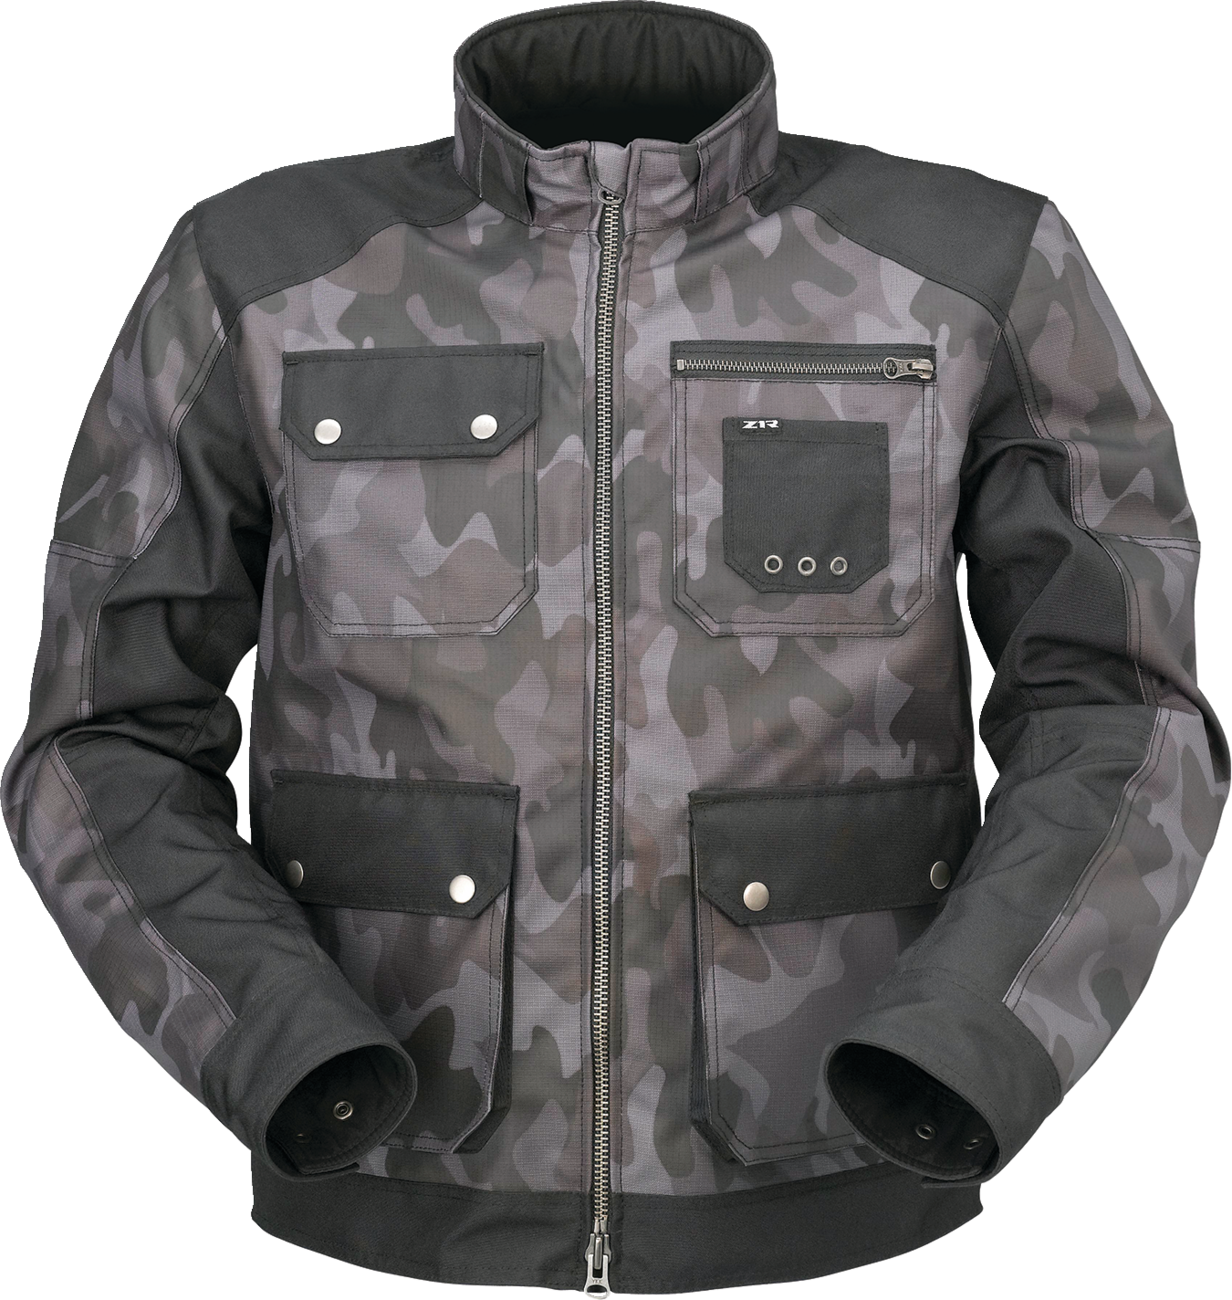 Z1R Camo Jacket - Gray/Black - Large 2820-5965